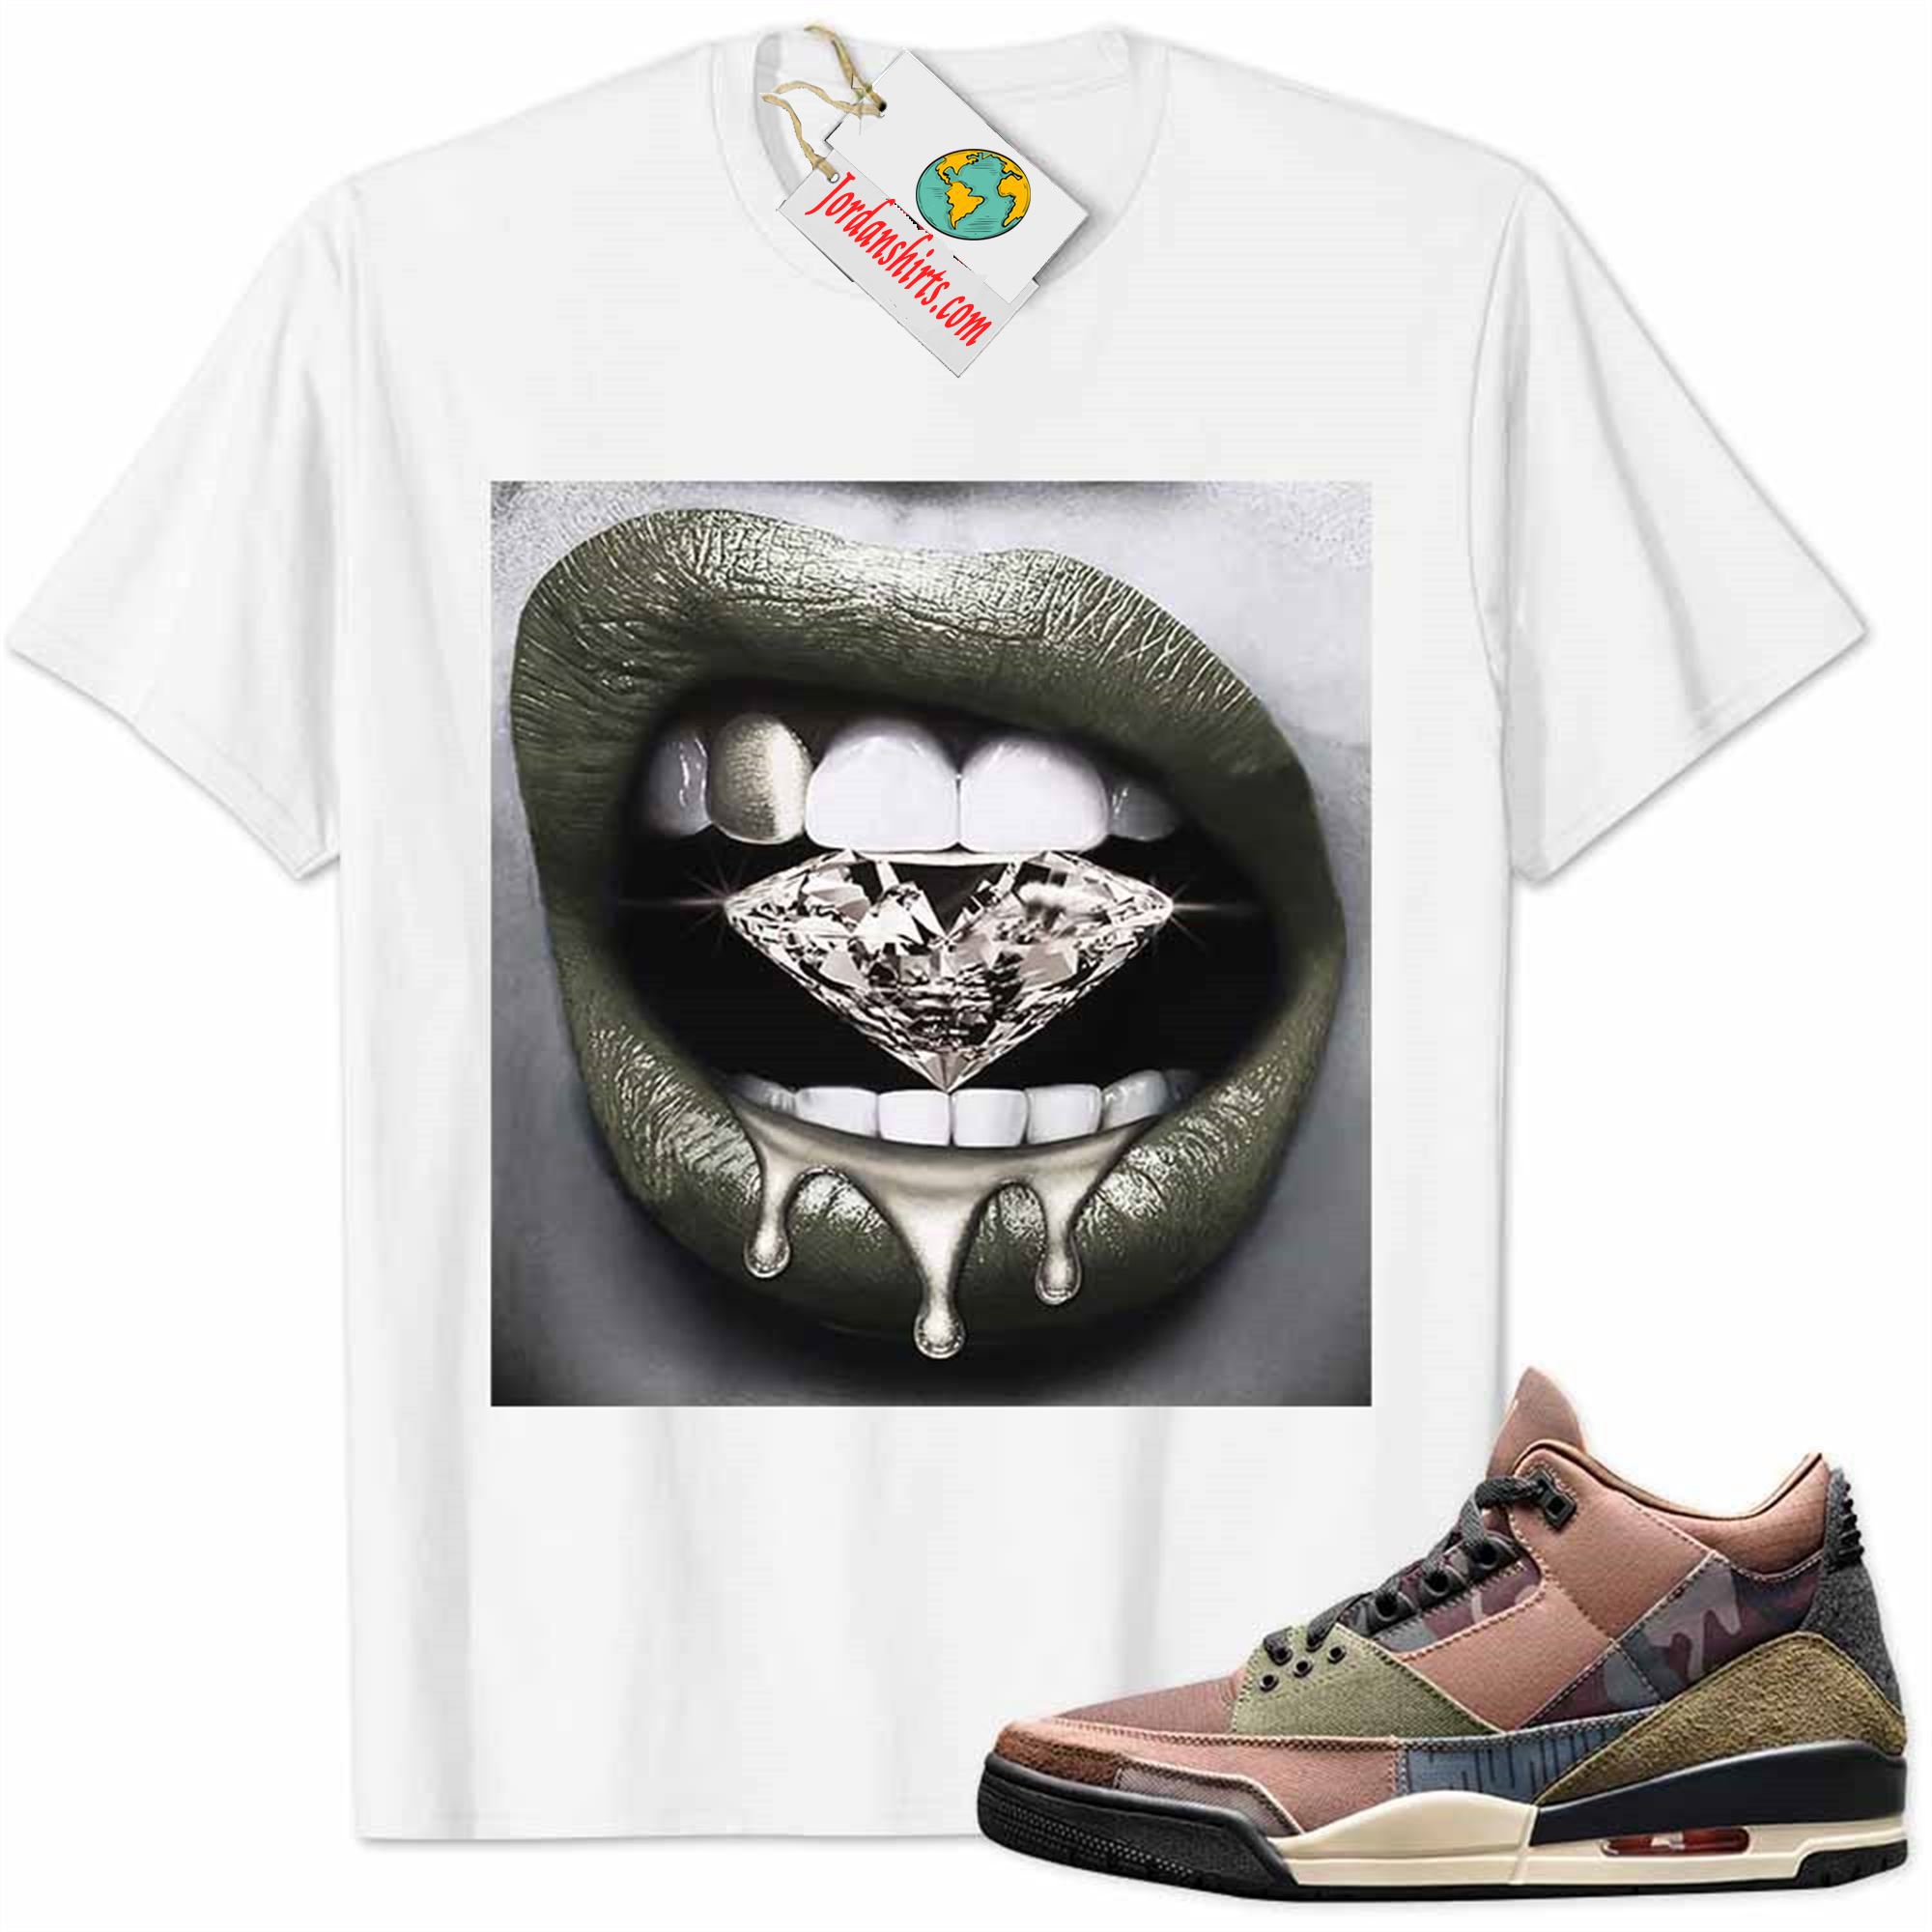 Jordan 3 Shirt, Jordan 3 Patchwork Shirt Sexy Lip Bite Diamond Dripping White Full Size Up To 5xl